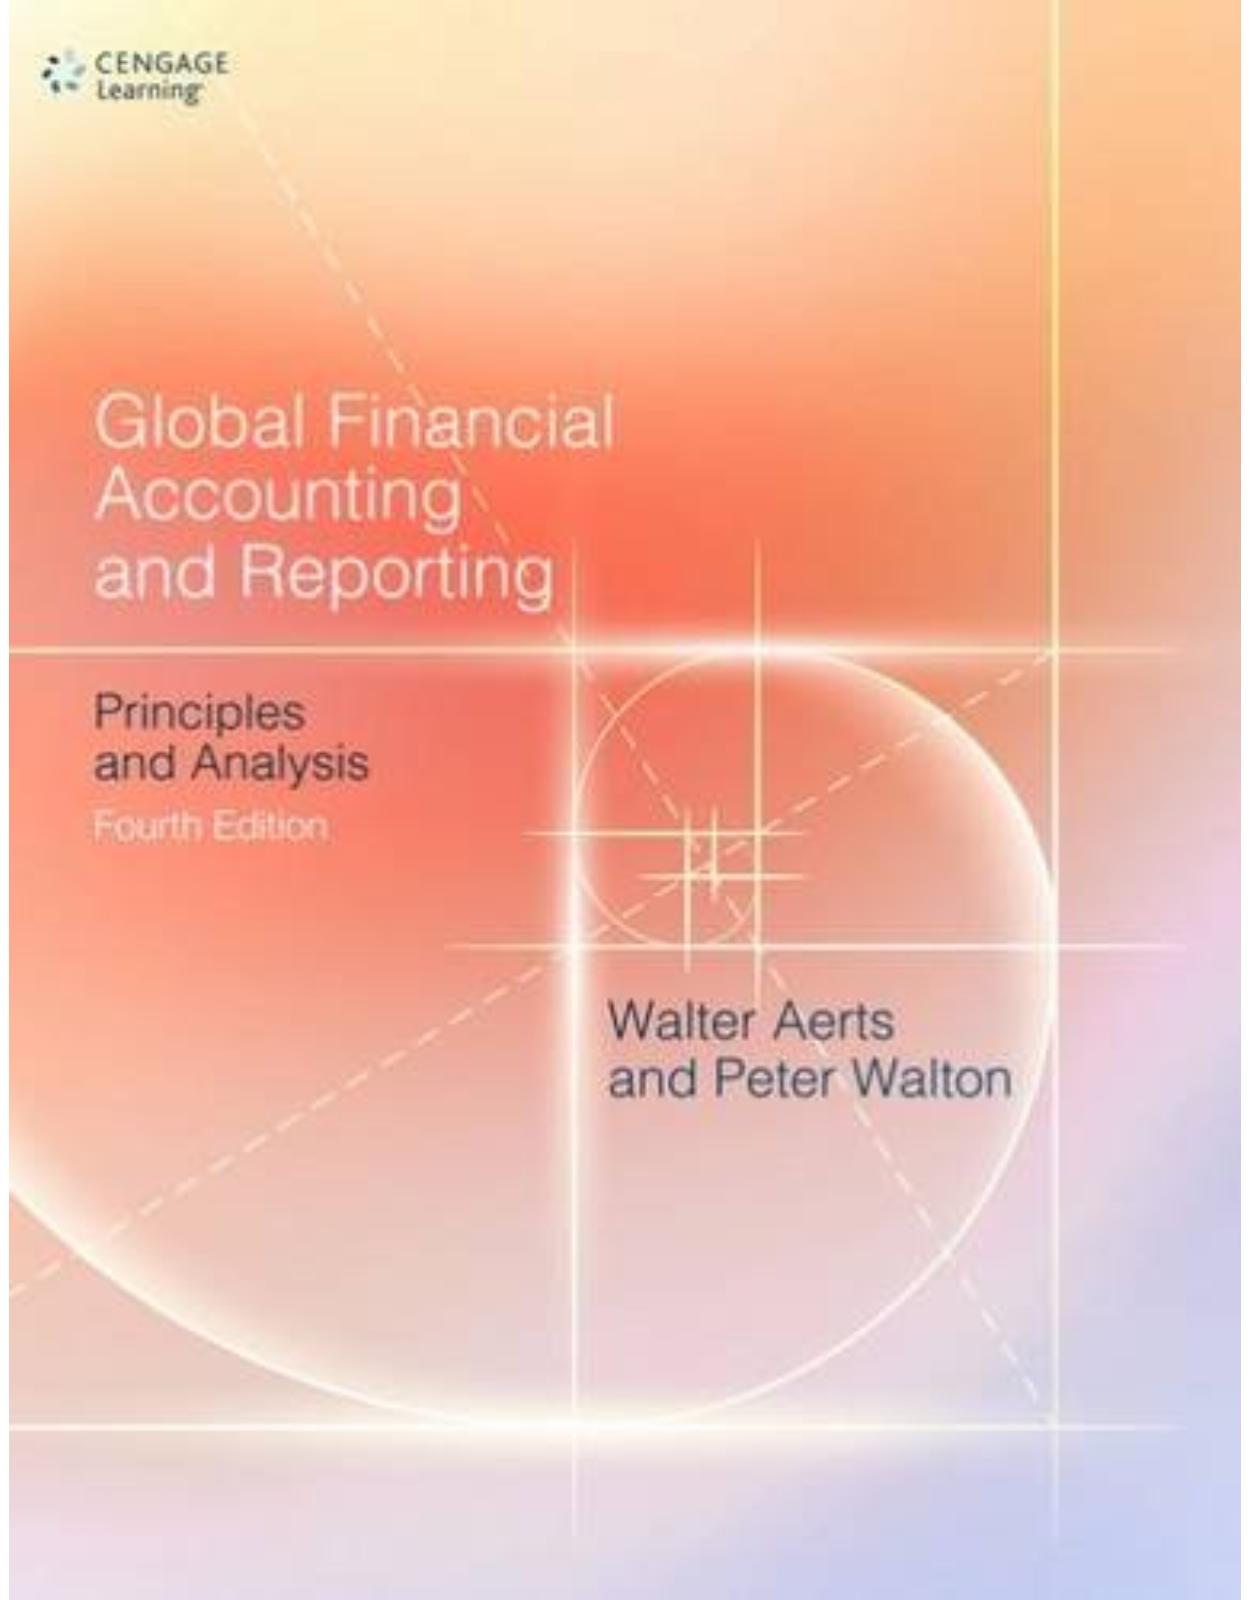 Global Financial Accounting and Reporting: Principles and Analysis. Peter Walton and Walter Aerts